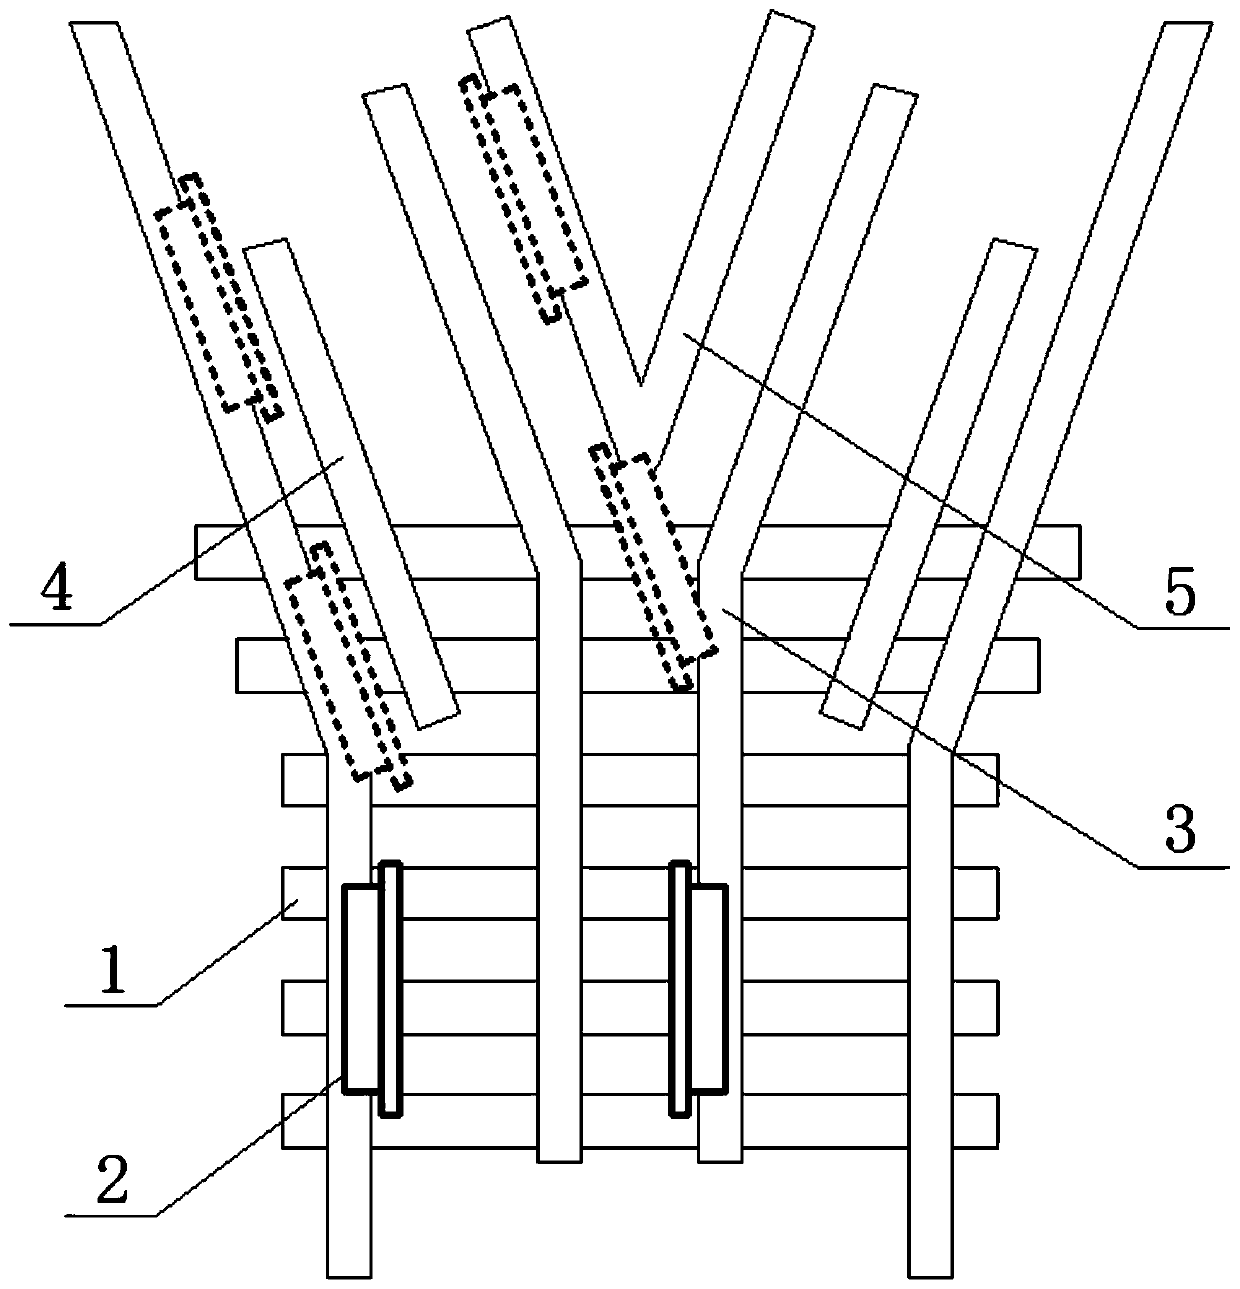 Train hub steering self-correcting assembly